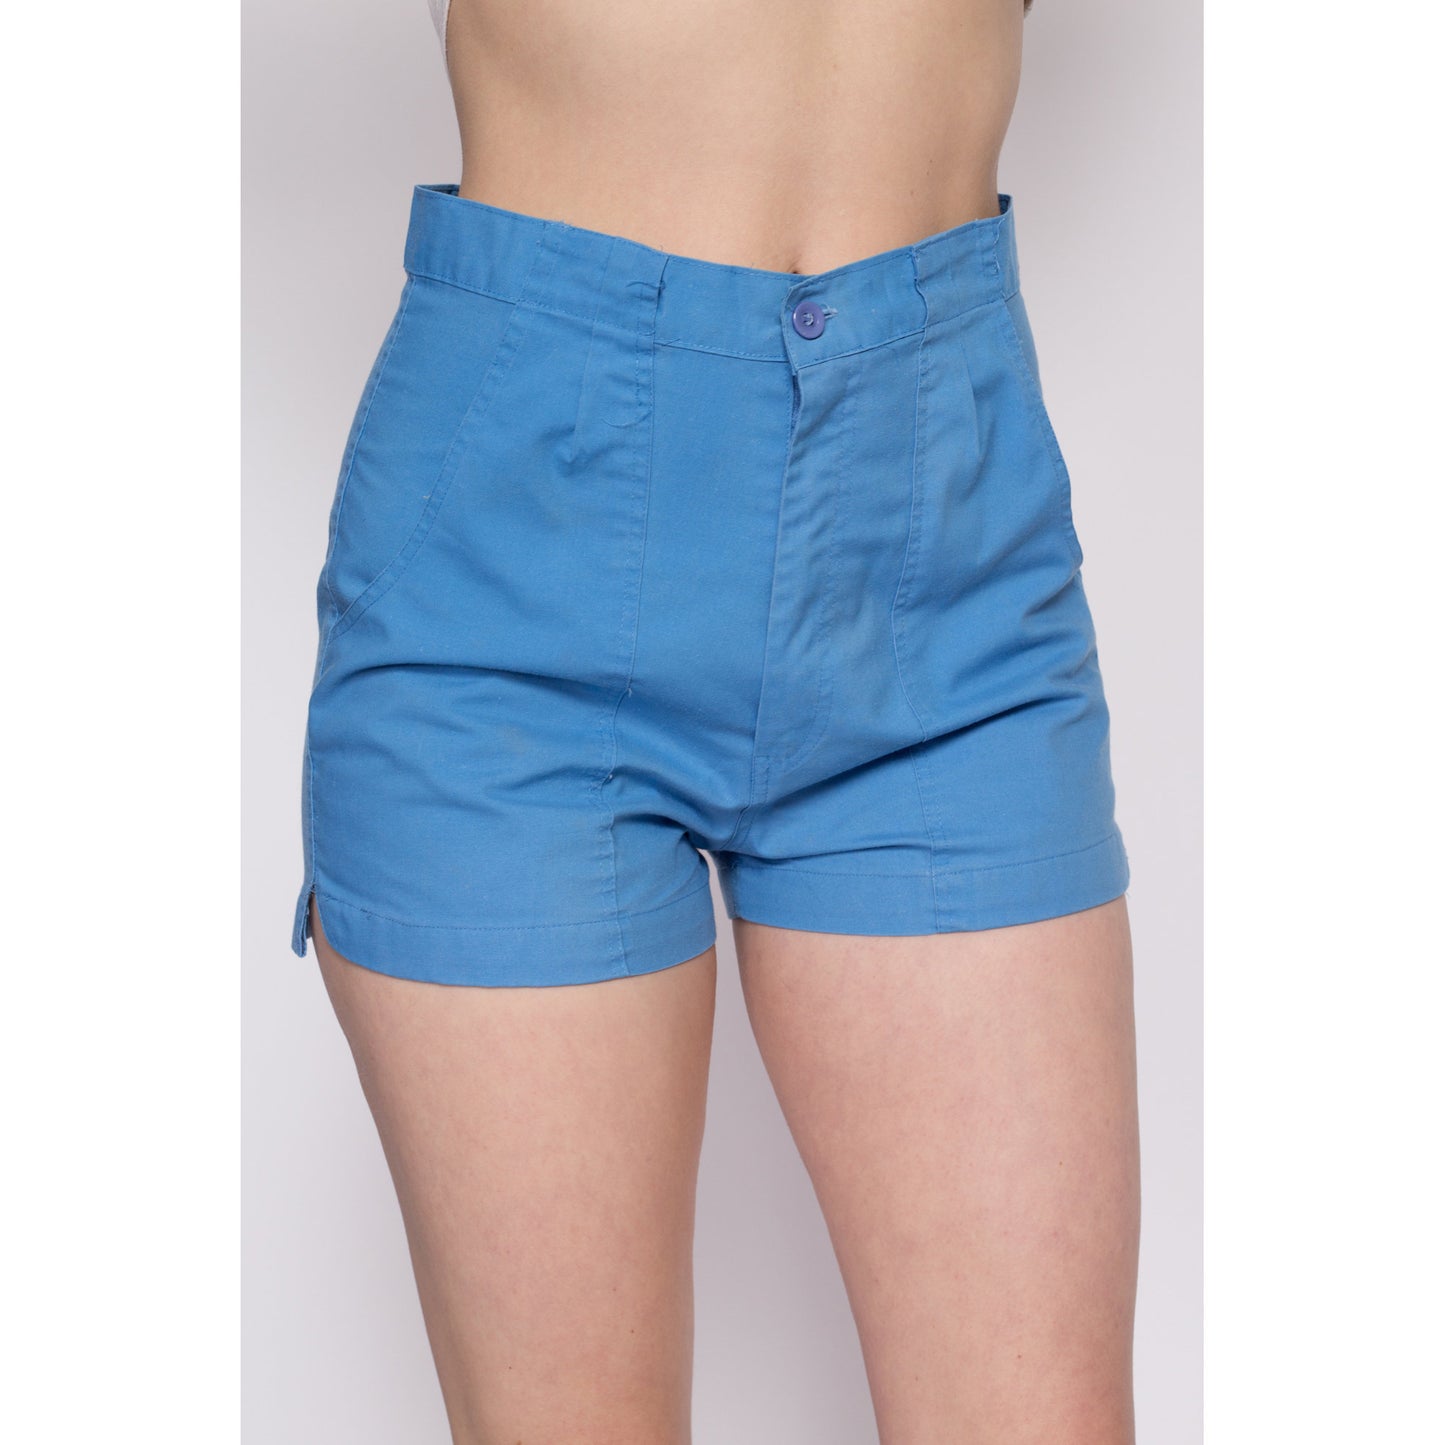 Medium 70s Blue High Waisted Shorts 29" | Retro Vintage Casual Summer Shorts